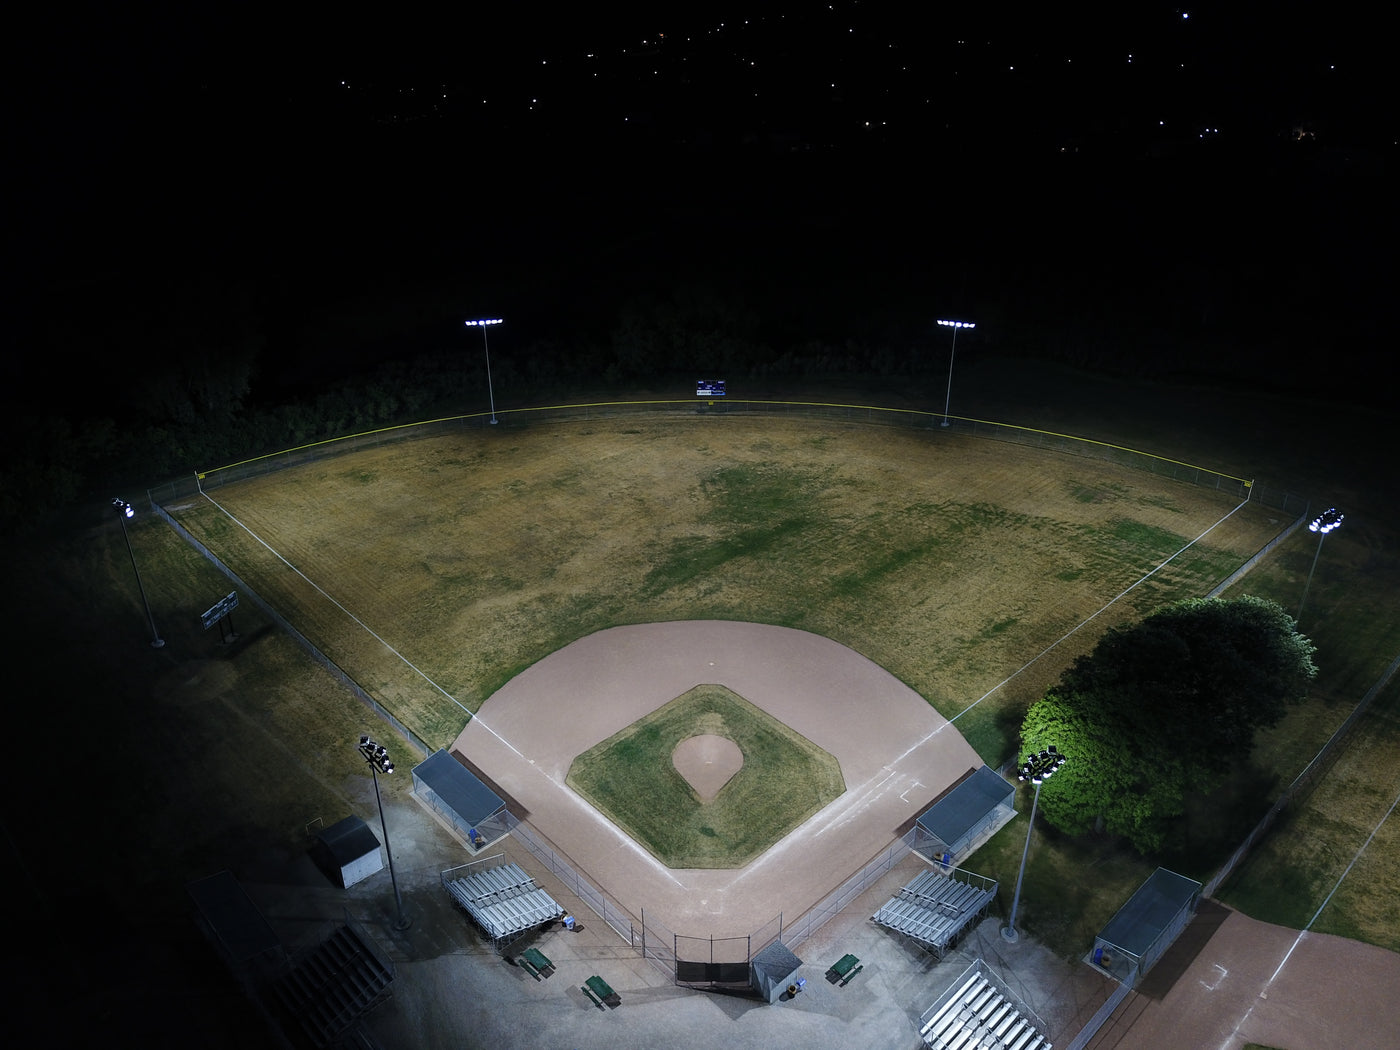 Champion Field Park LED Lighting | Oconomowoc Softball Lighting